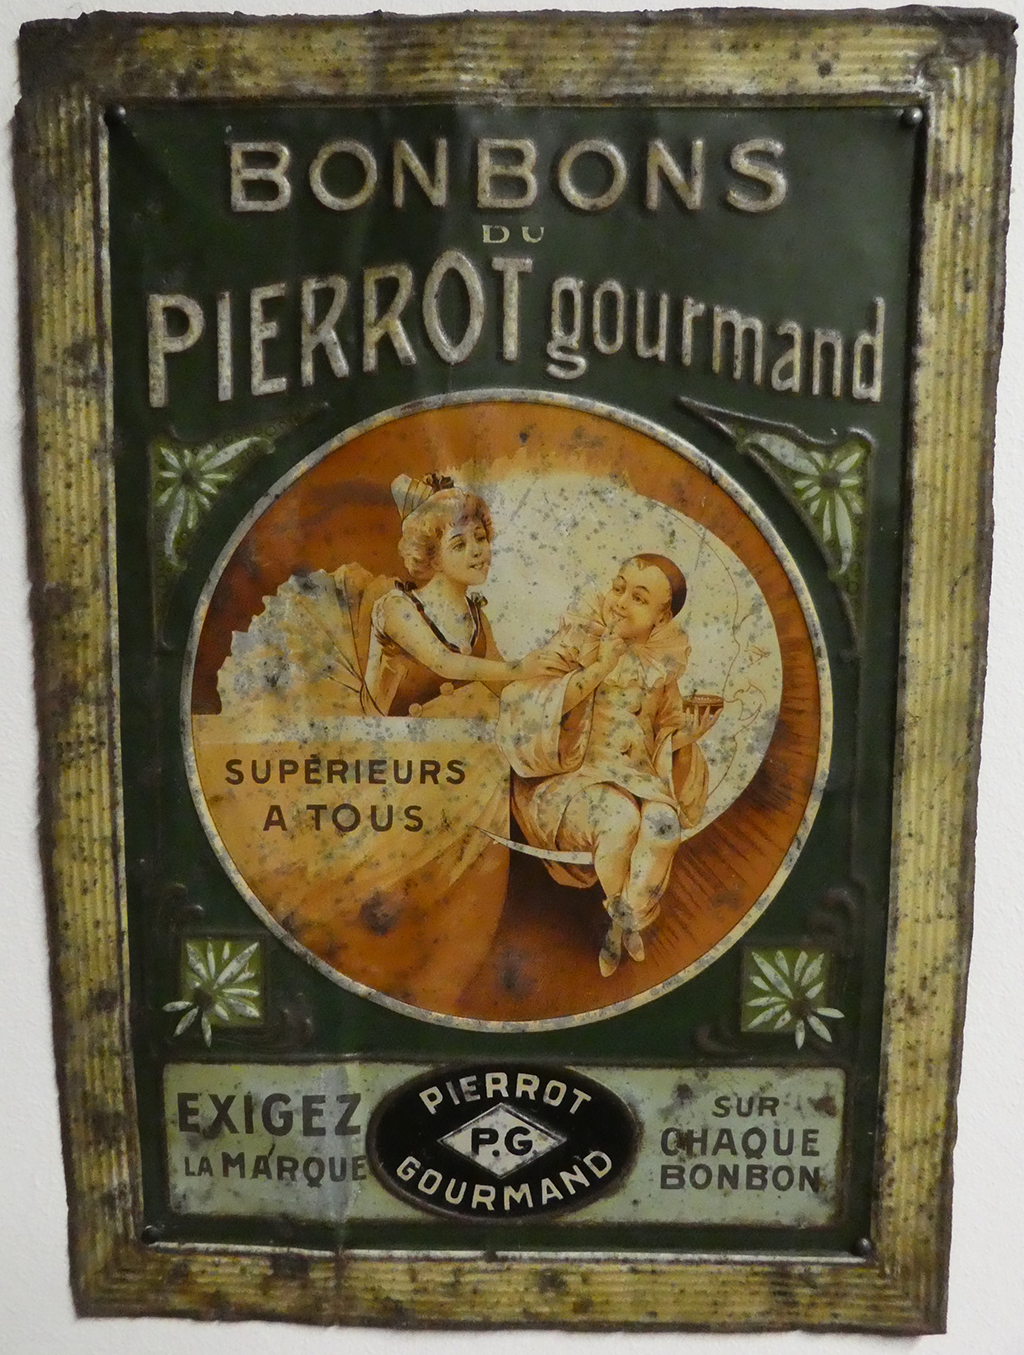 Pierrot Gourmand bust + 40 lollipops